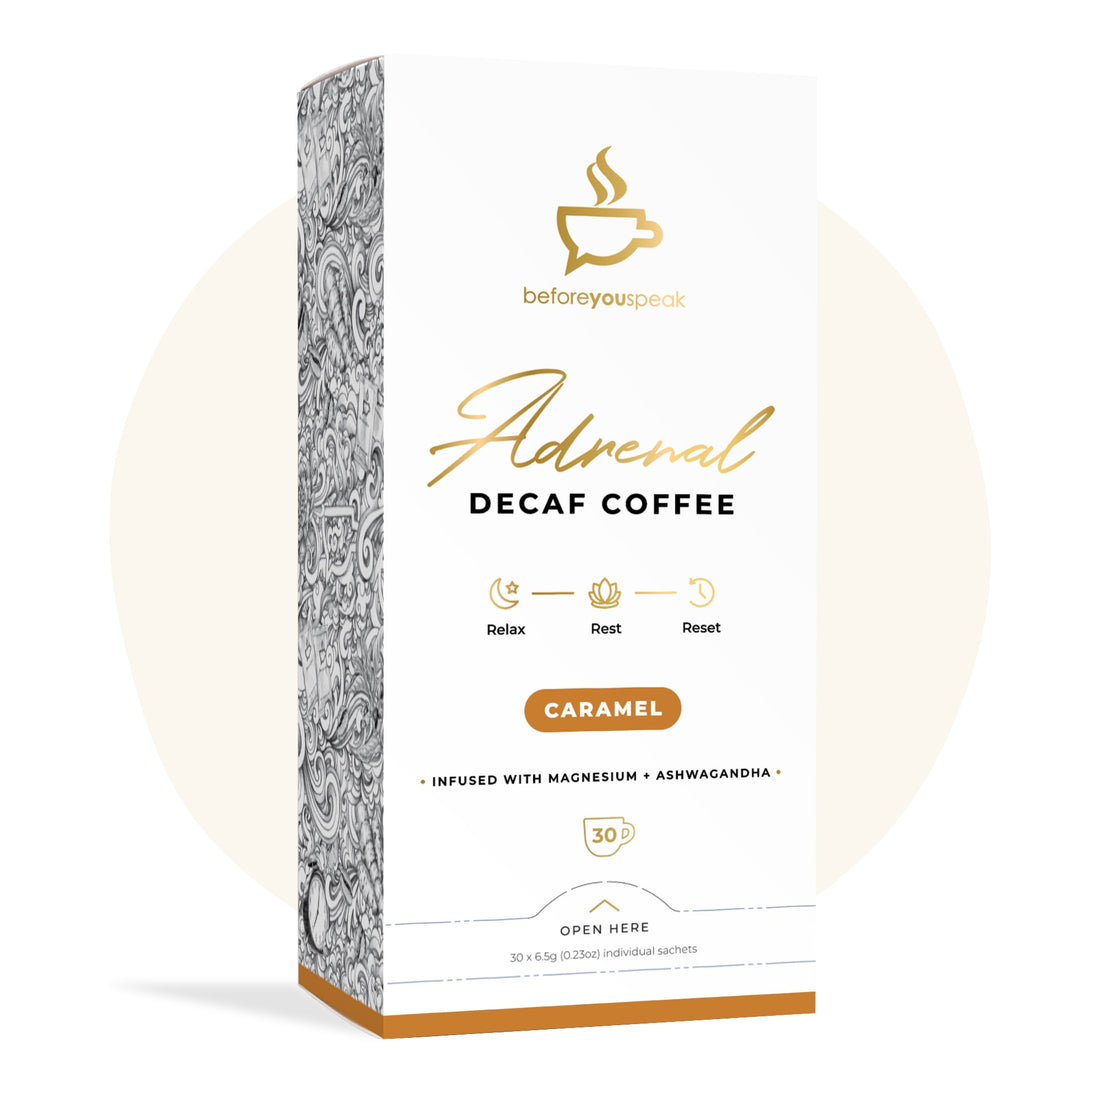 Before You Speak Adrenal Decaf Coffee Caramel 5g x 30 Pack